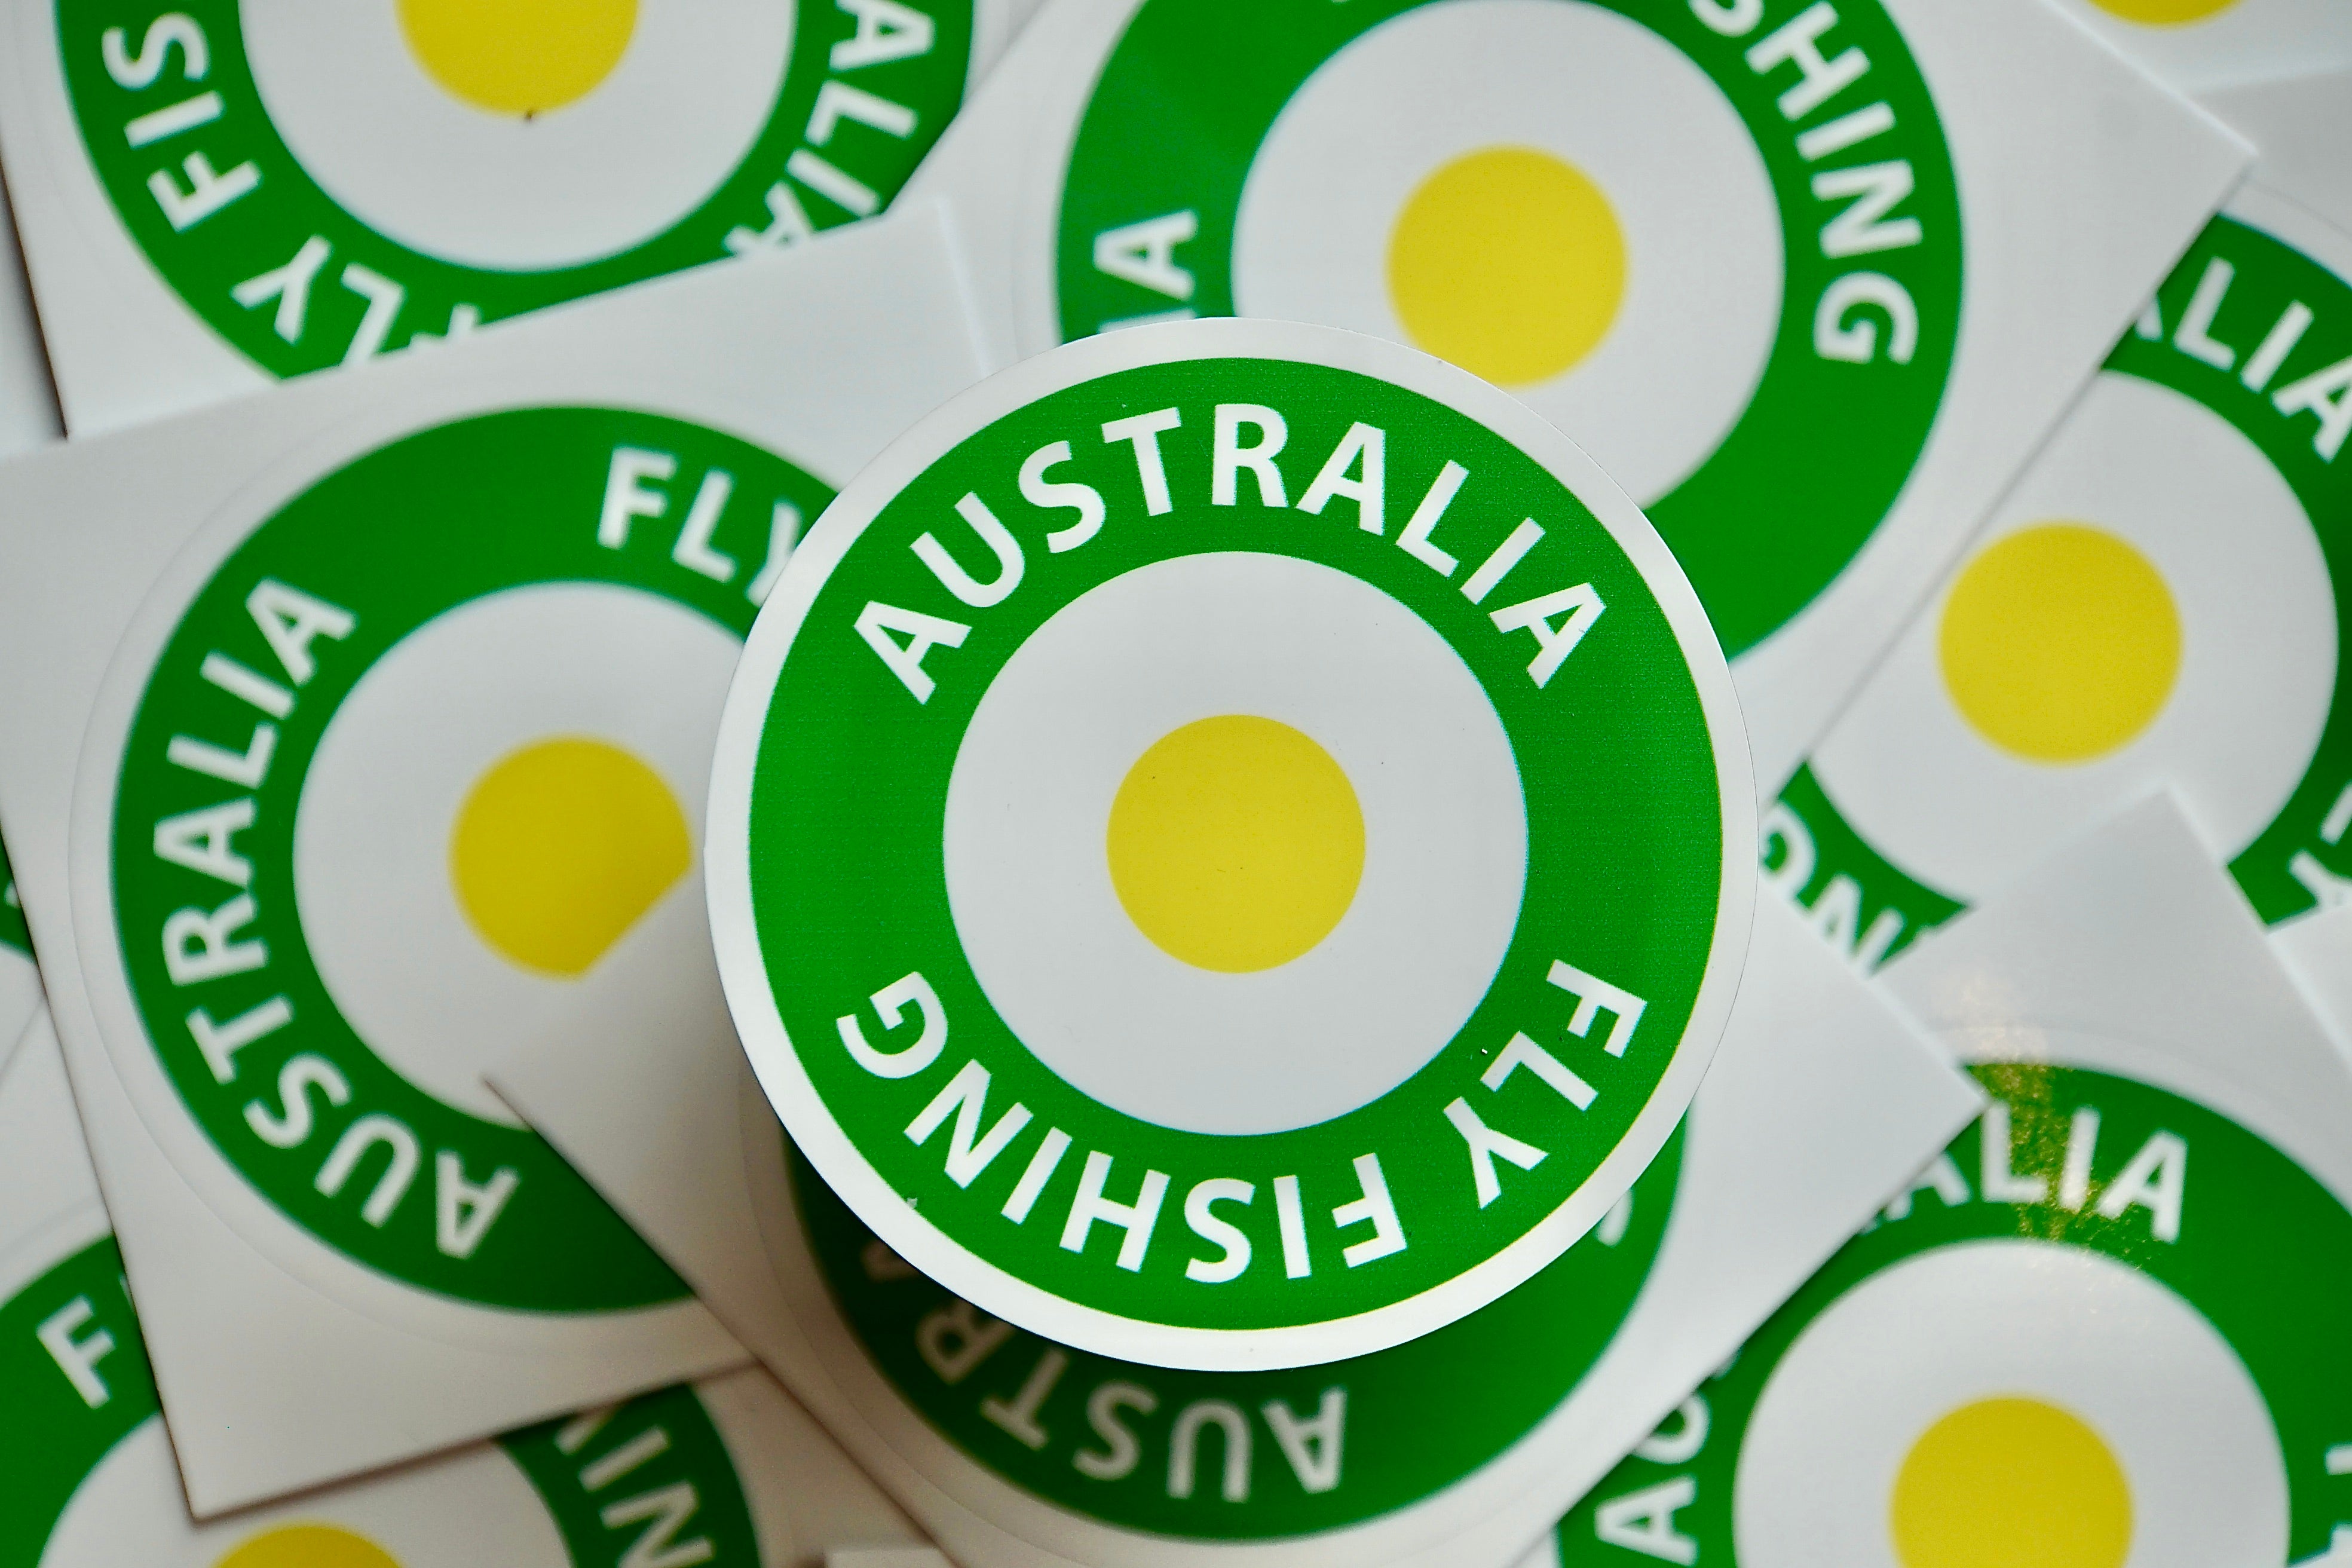 Australia Fly Fishing- Cool-Neat Sticker